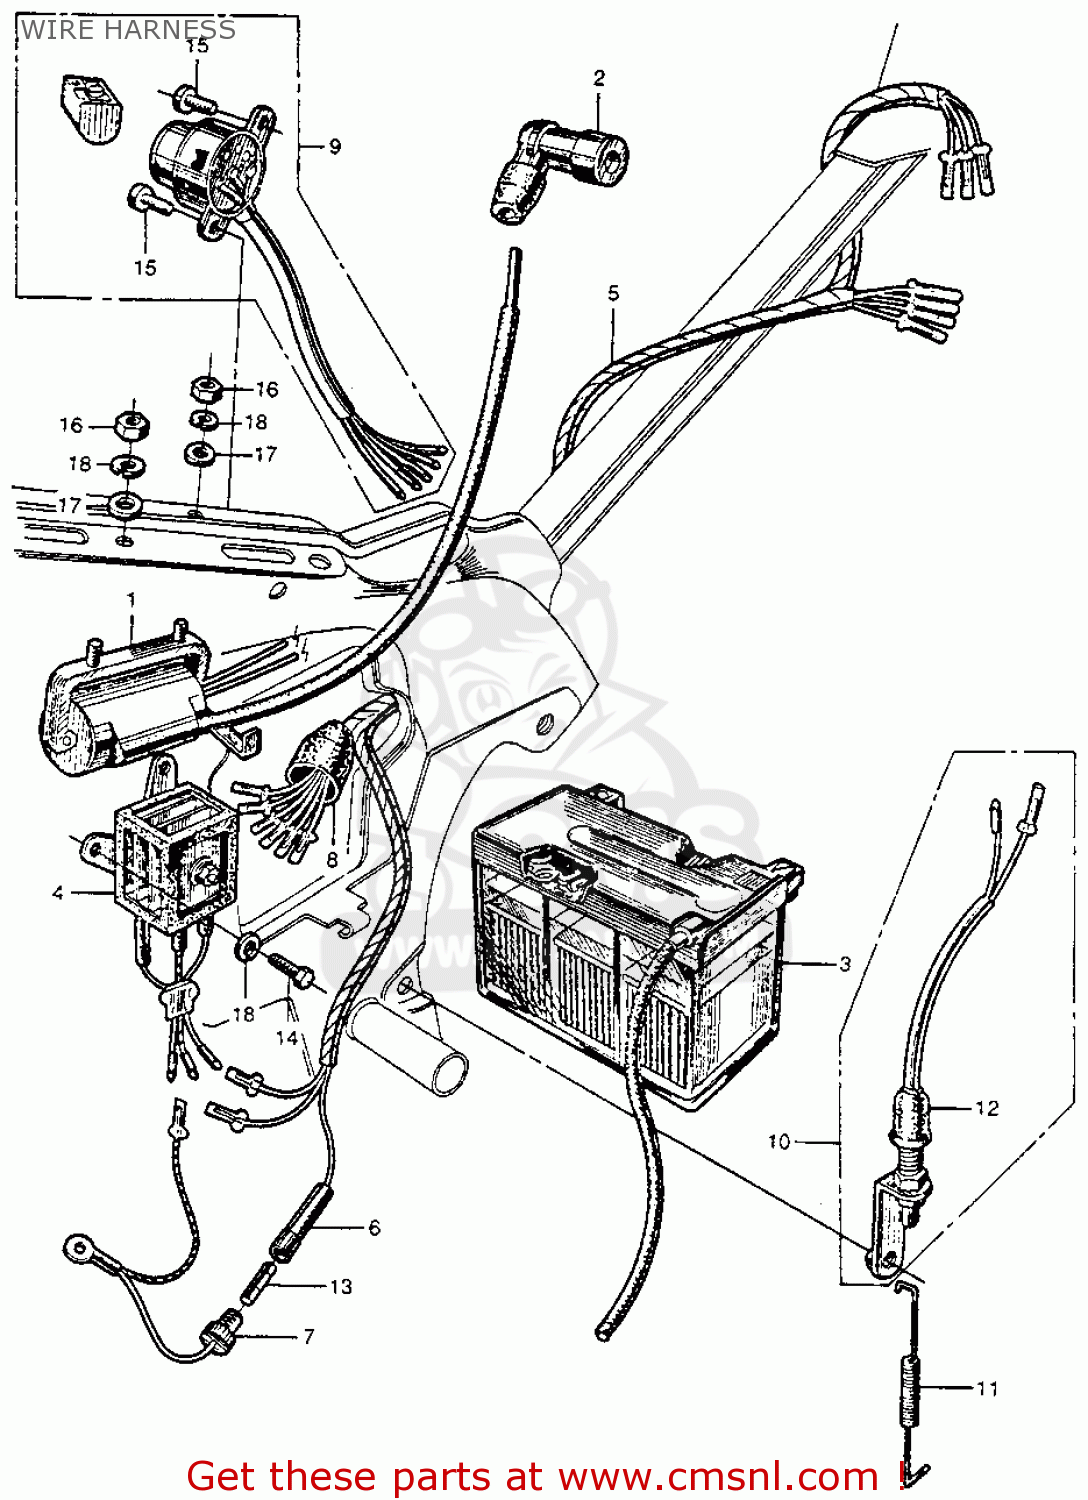 1967 Honda trail 90 ignition wiring #6